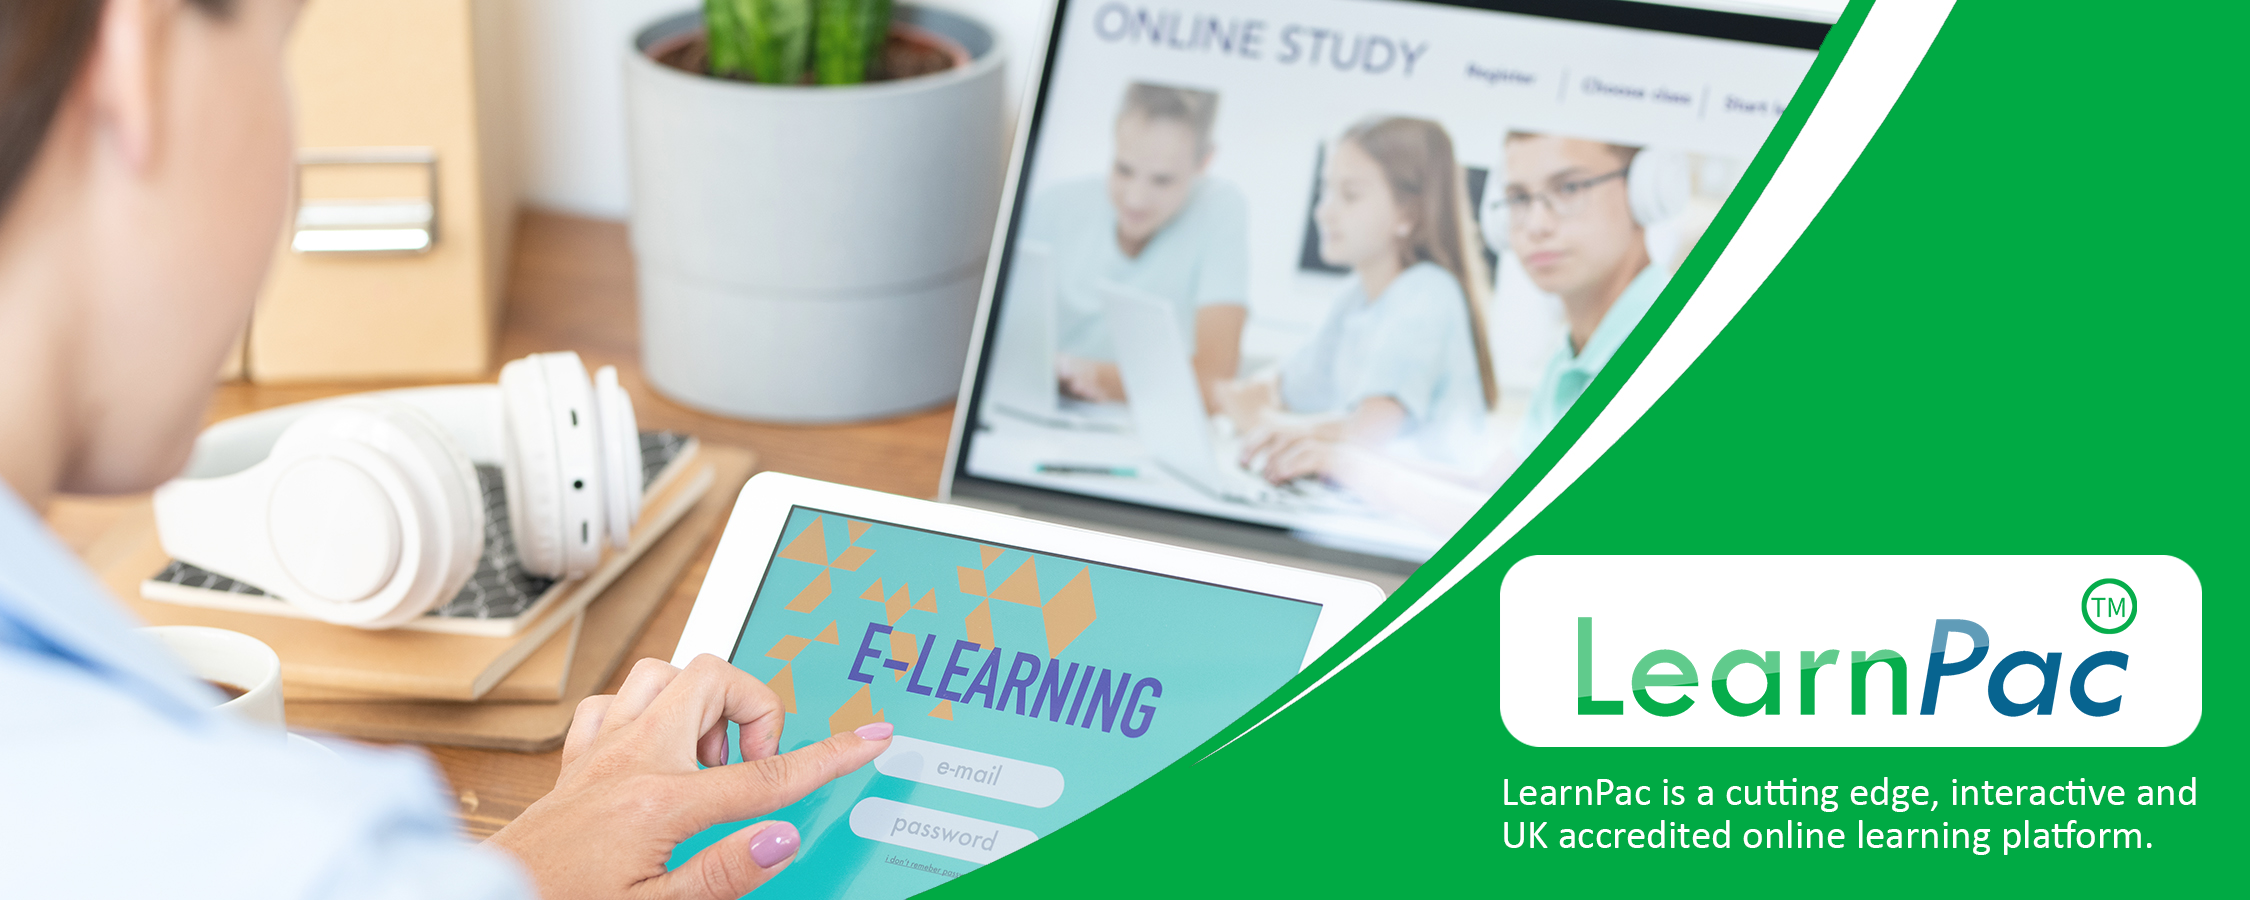 Improving Mindfulness Training - Online Learning Courses - E-Learning Courses - LearnPac Systems UK -